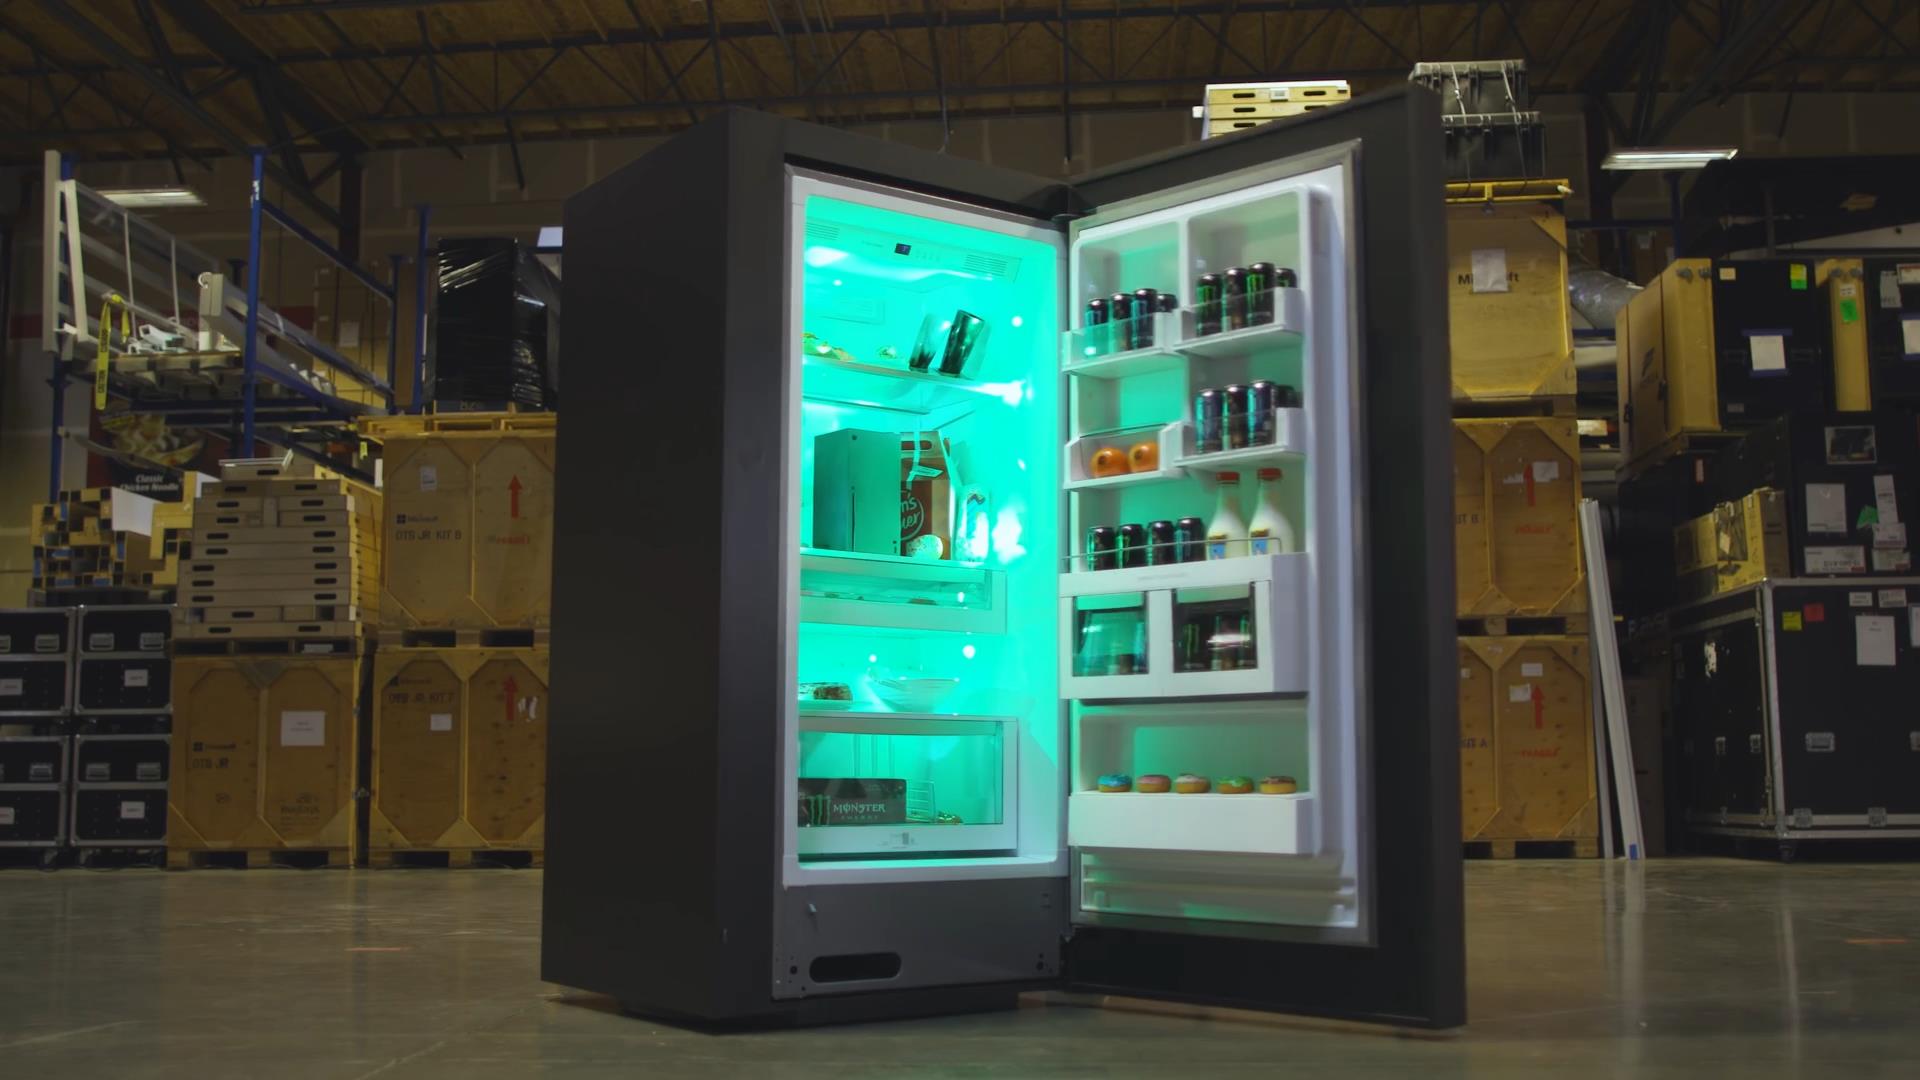 XSX冰箱宣傳片公布 官方正在舉辦抽獎送冰箱活動